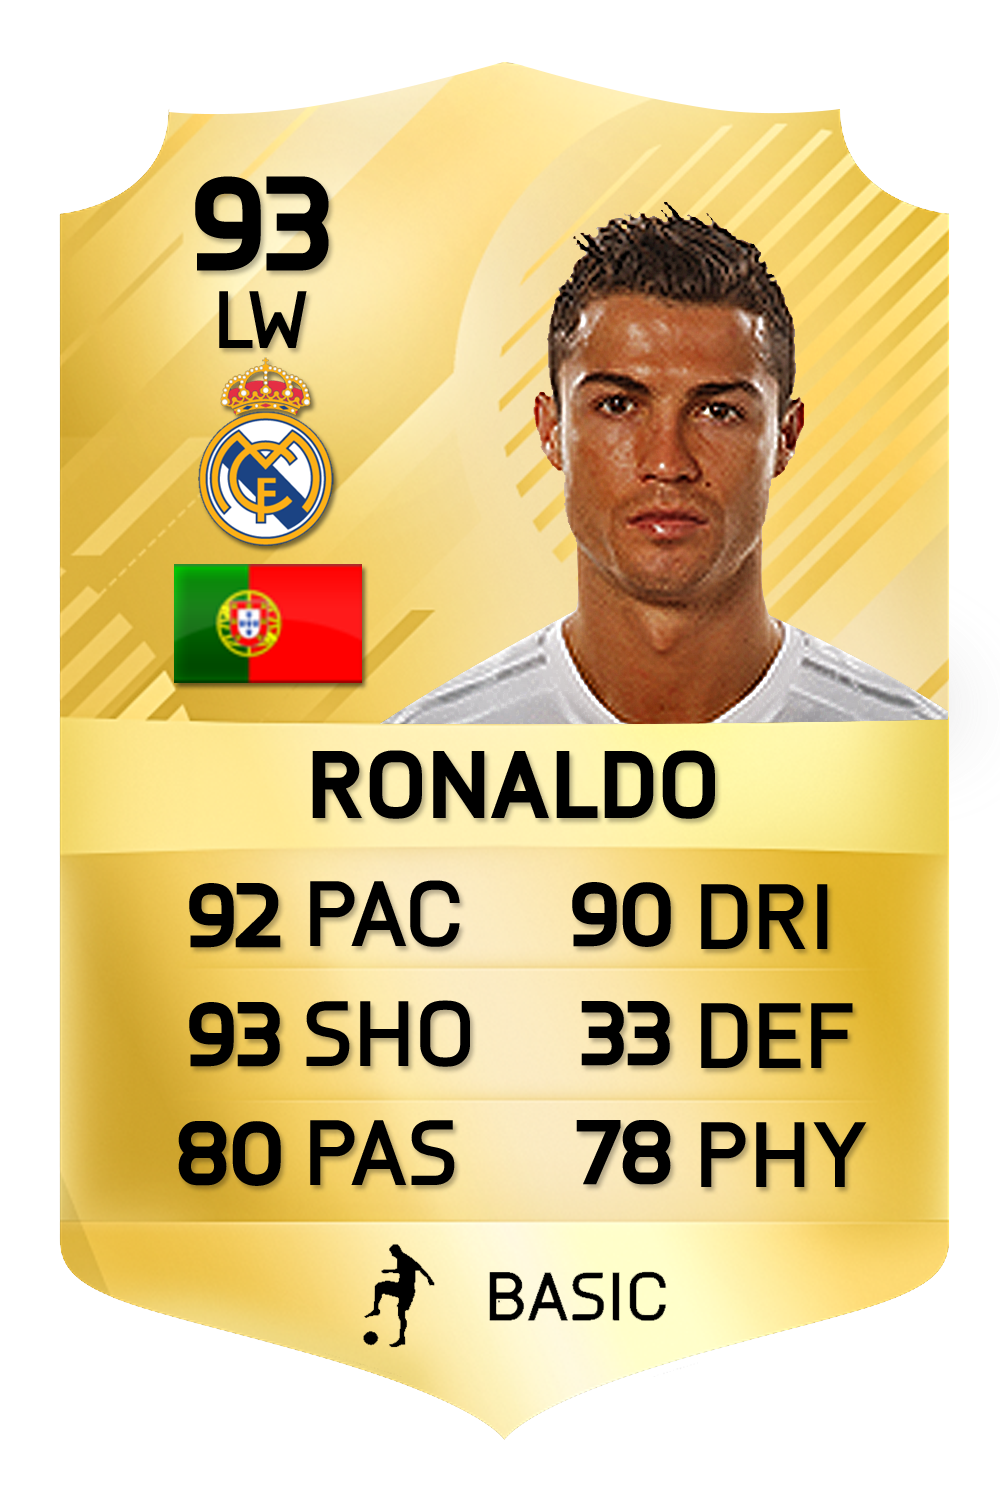 Ruban on Twitter: "RONALDO FIFA 17 CARD CONCEPT! RTS AND LIKES